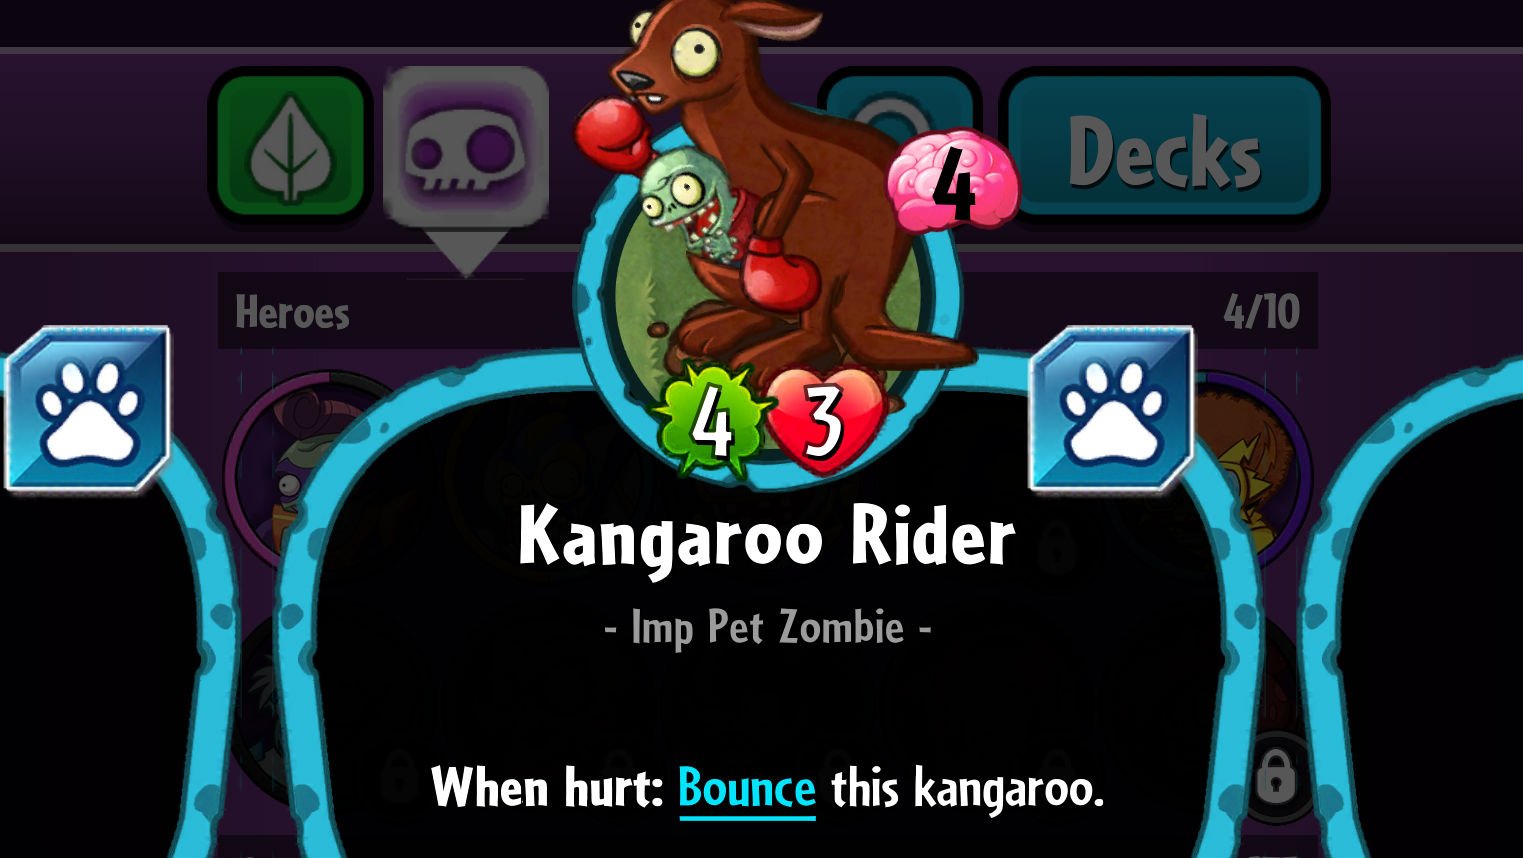 Plants vs. Zombies Heroes Kangaroo Rider